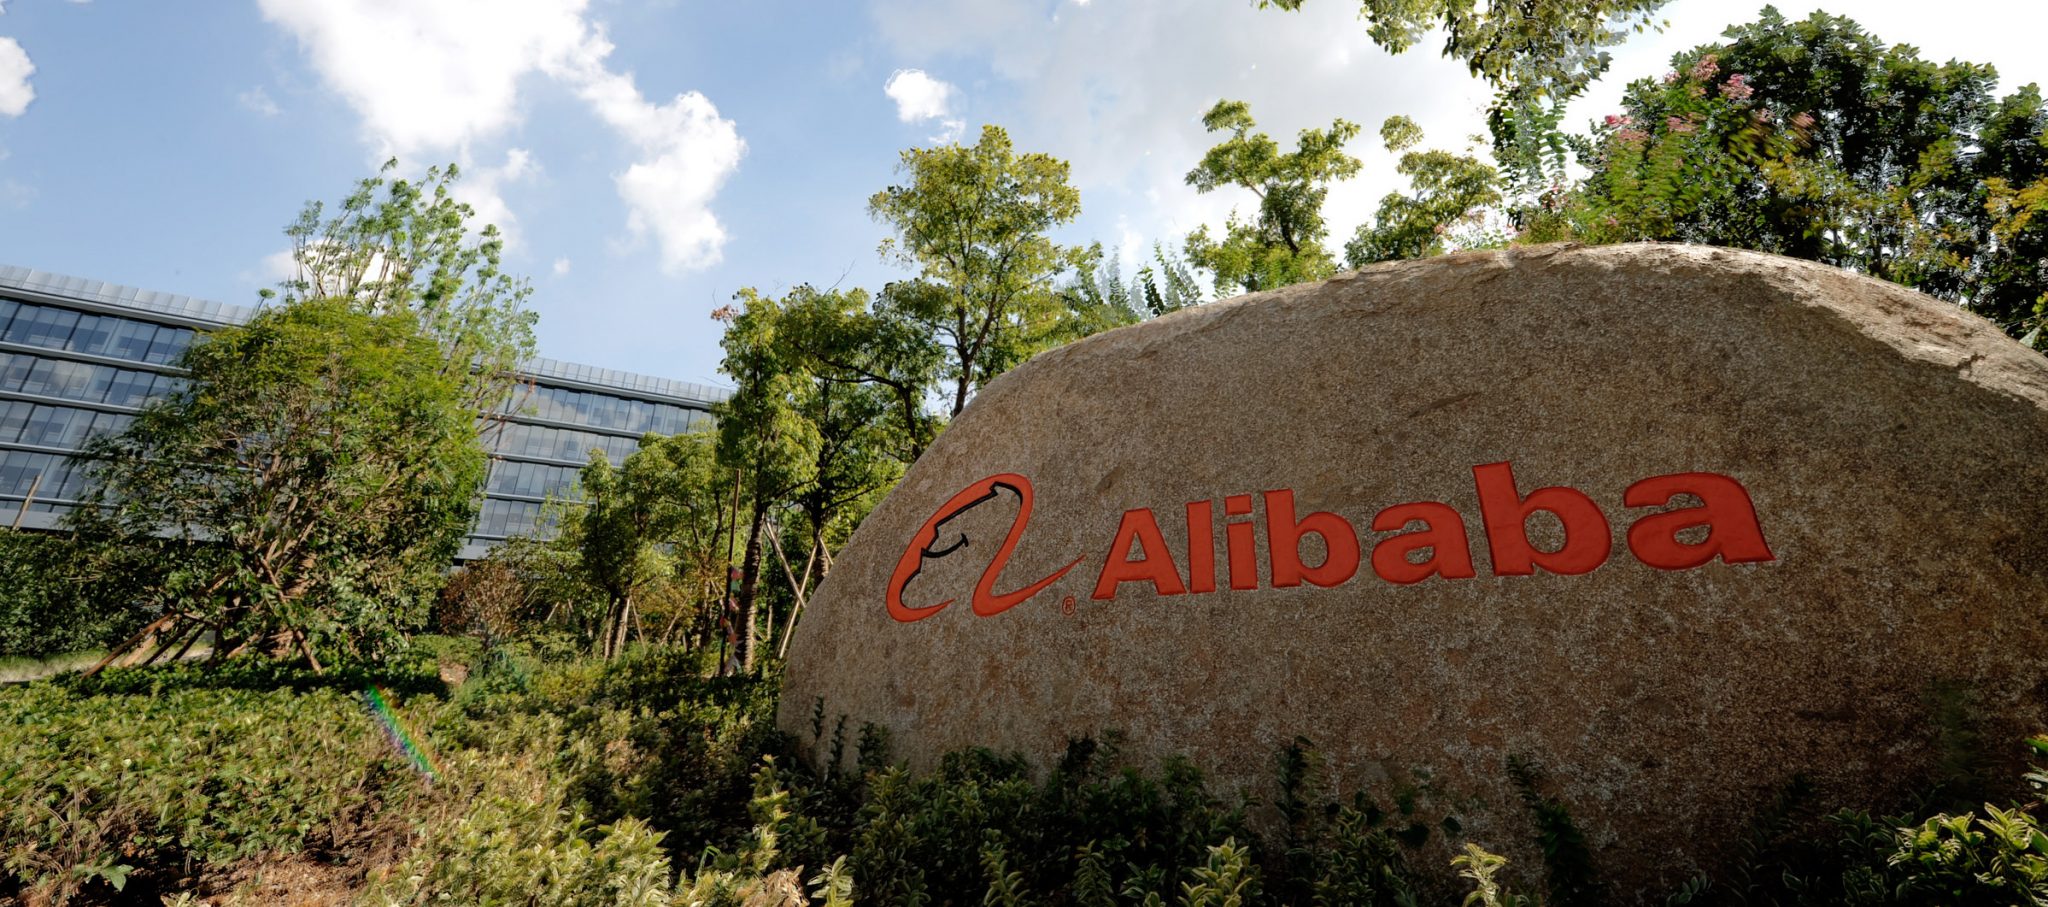 Alibaba Going Public